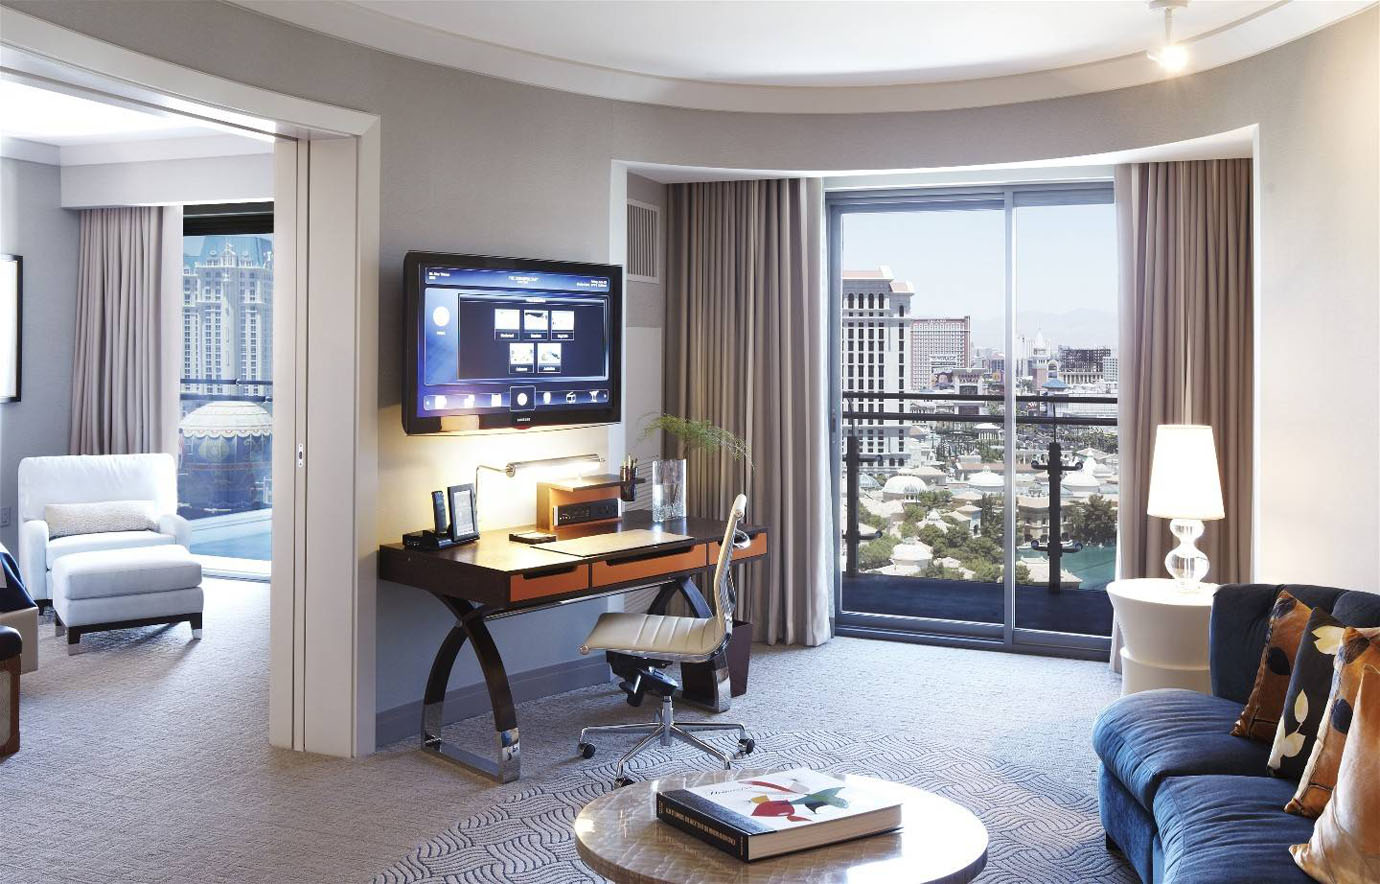 Swanky Hotel Interior Design The Cosmopolitan Of Las Vegas